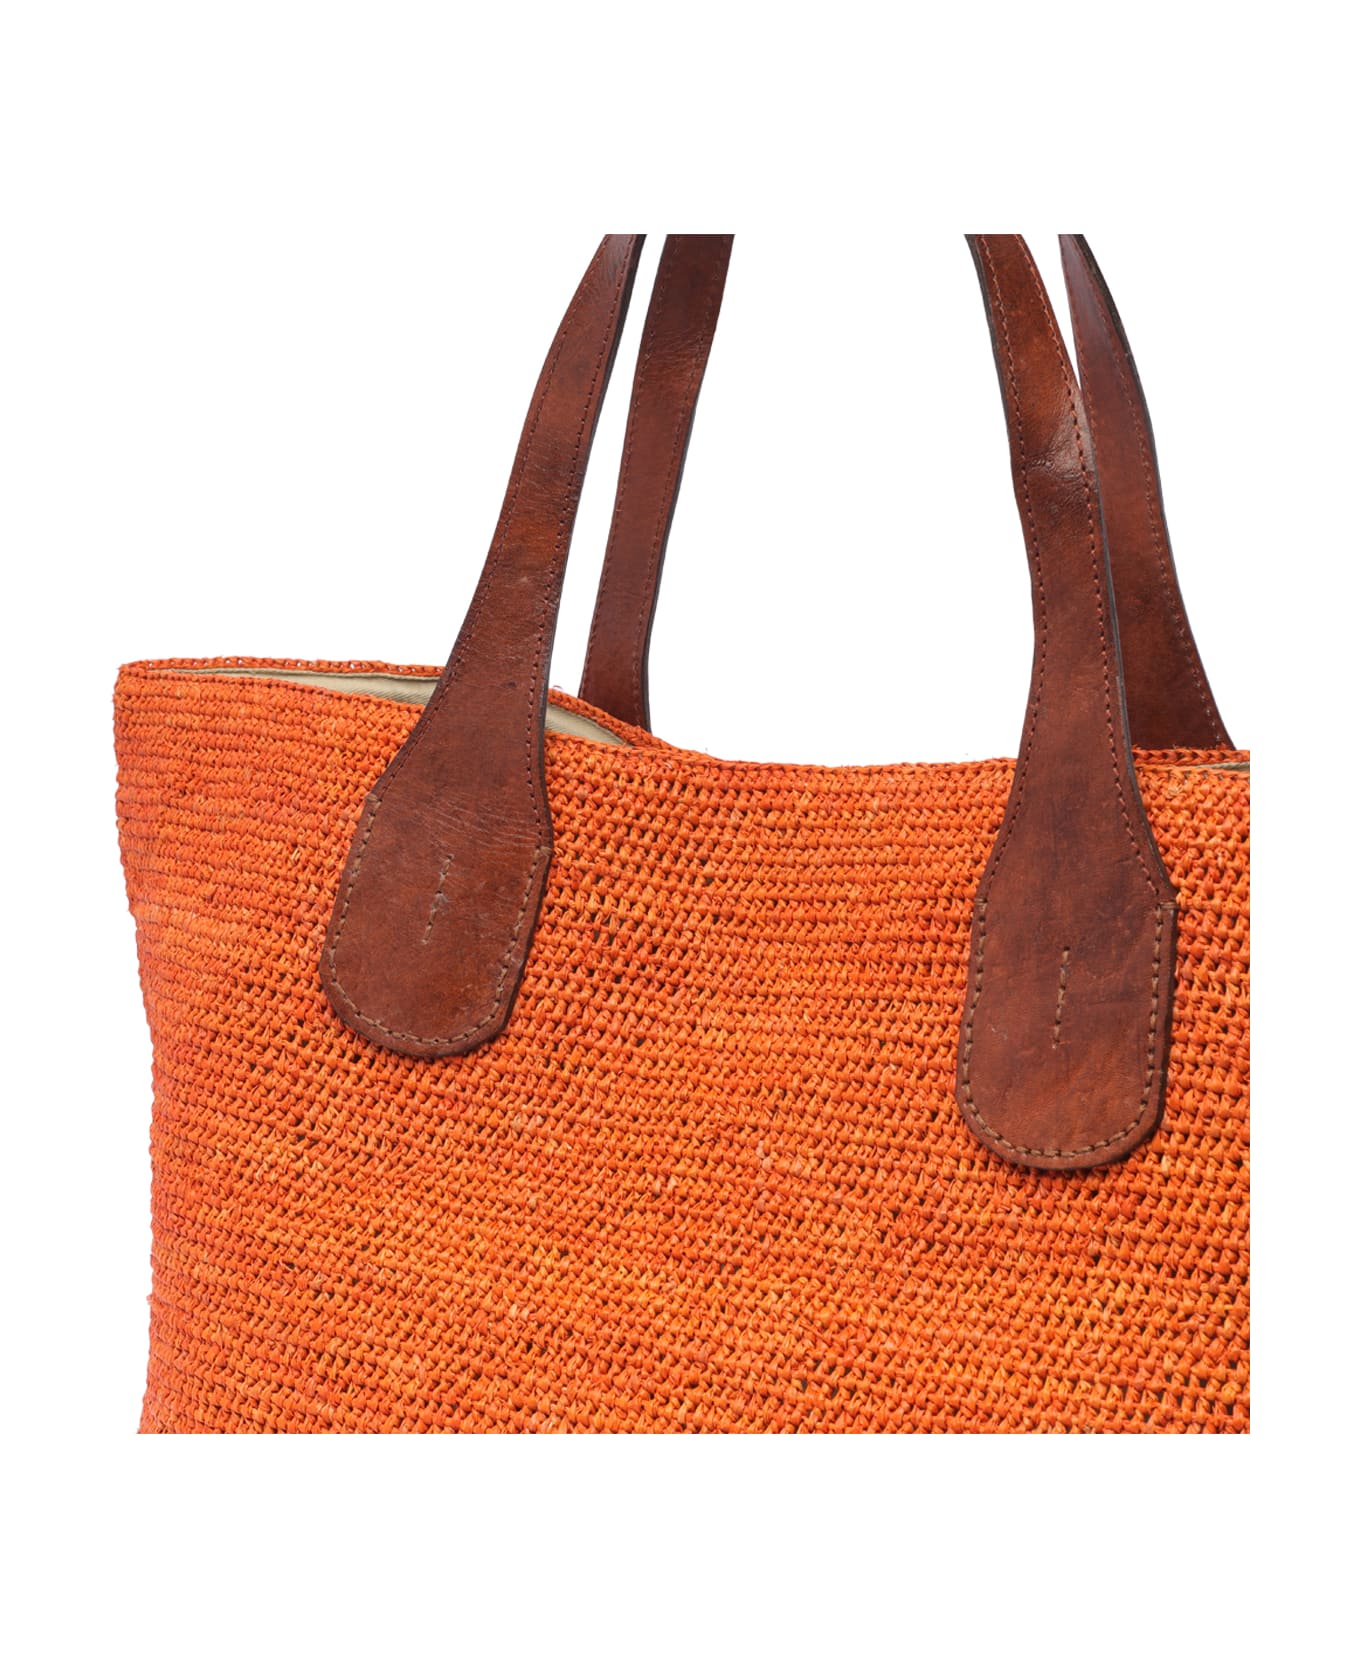 Ibeliv Tokyo Handbag - Orange